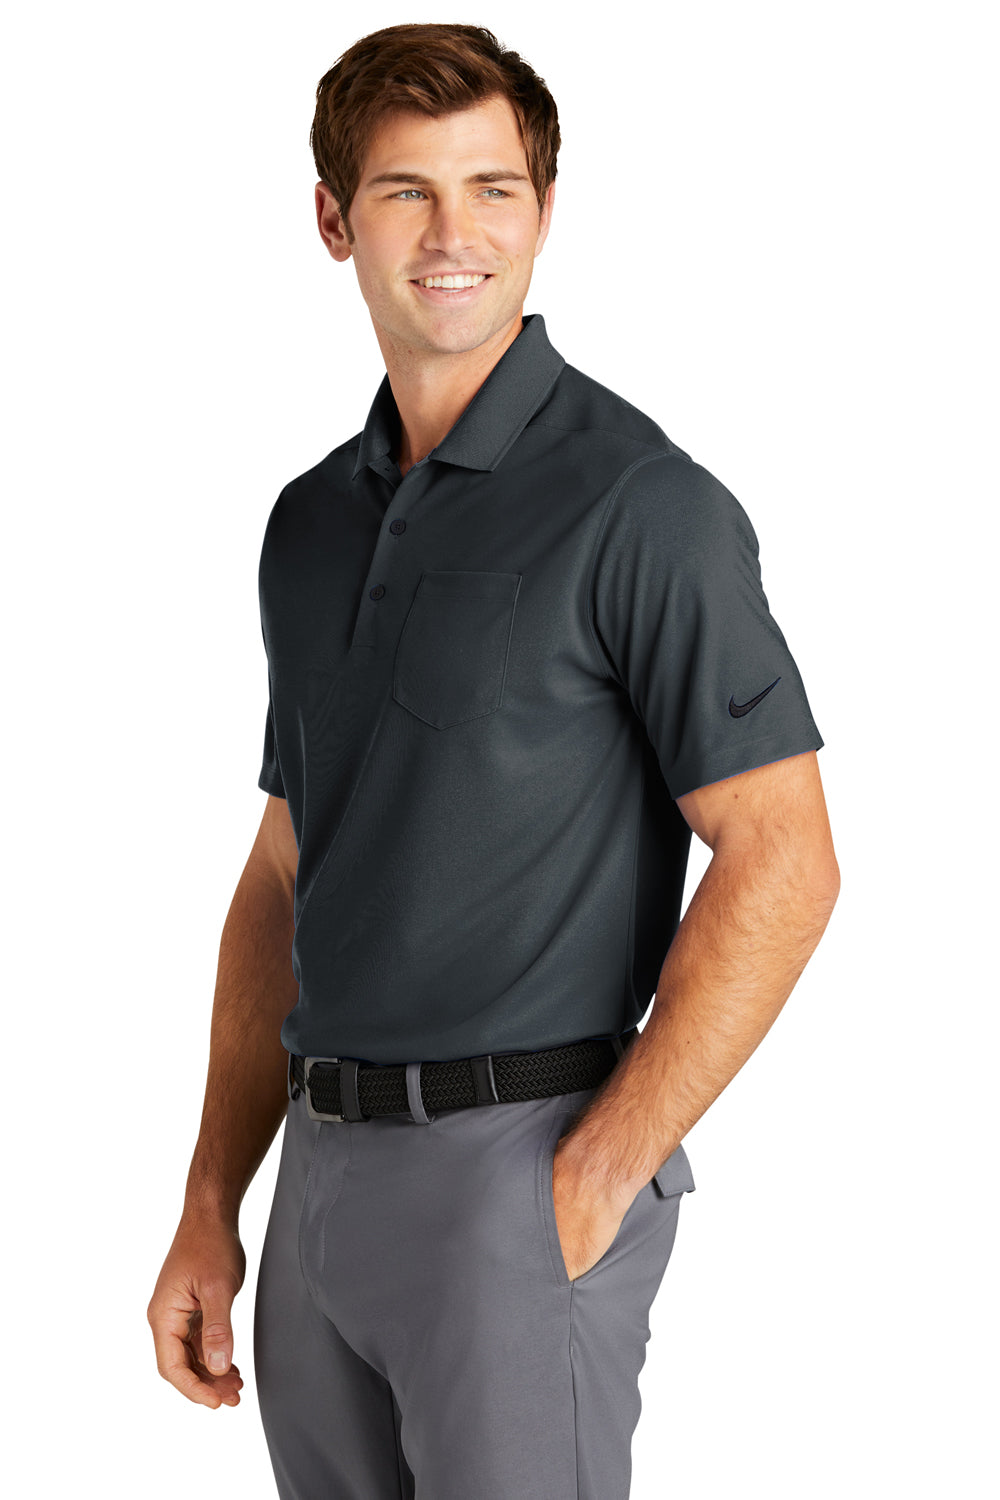 Nike NKDC2103 Mens Dri-Fit Moisture Wicking Micro Pique 2.0 Short Sleeve Polo Shirt w/ Pocket Anthracite Grey Model 3Q